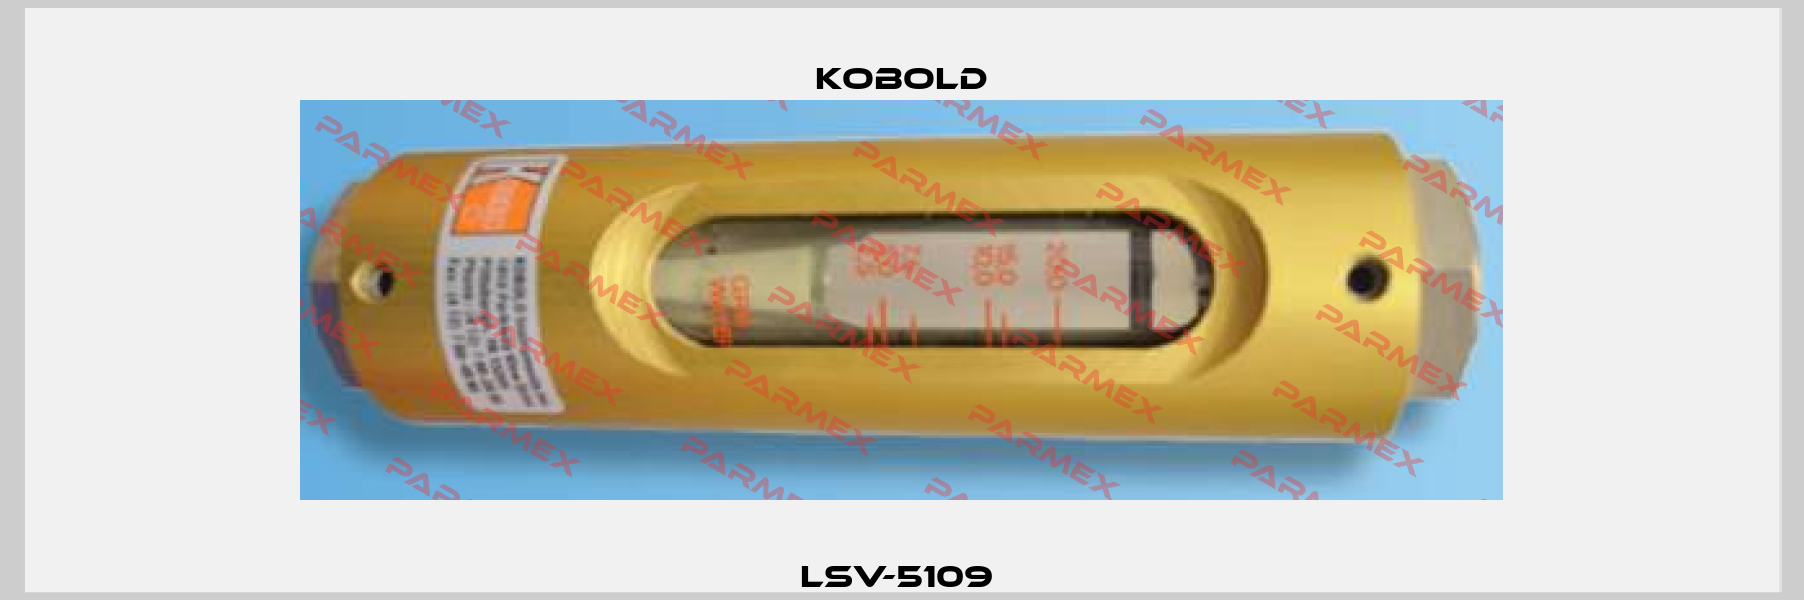 lSV-5109  Kobold